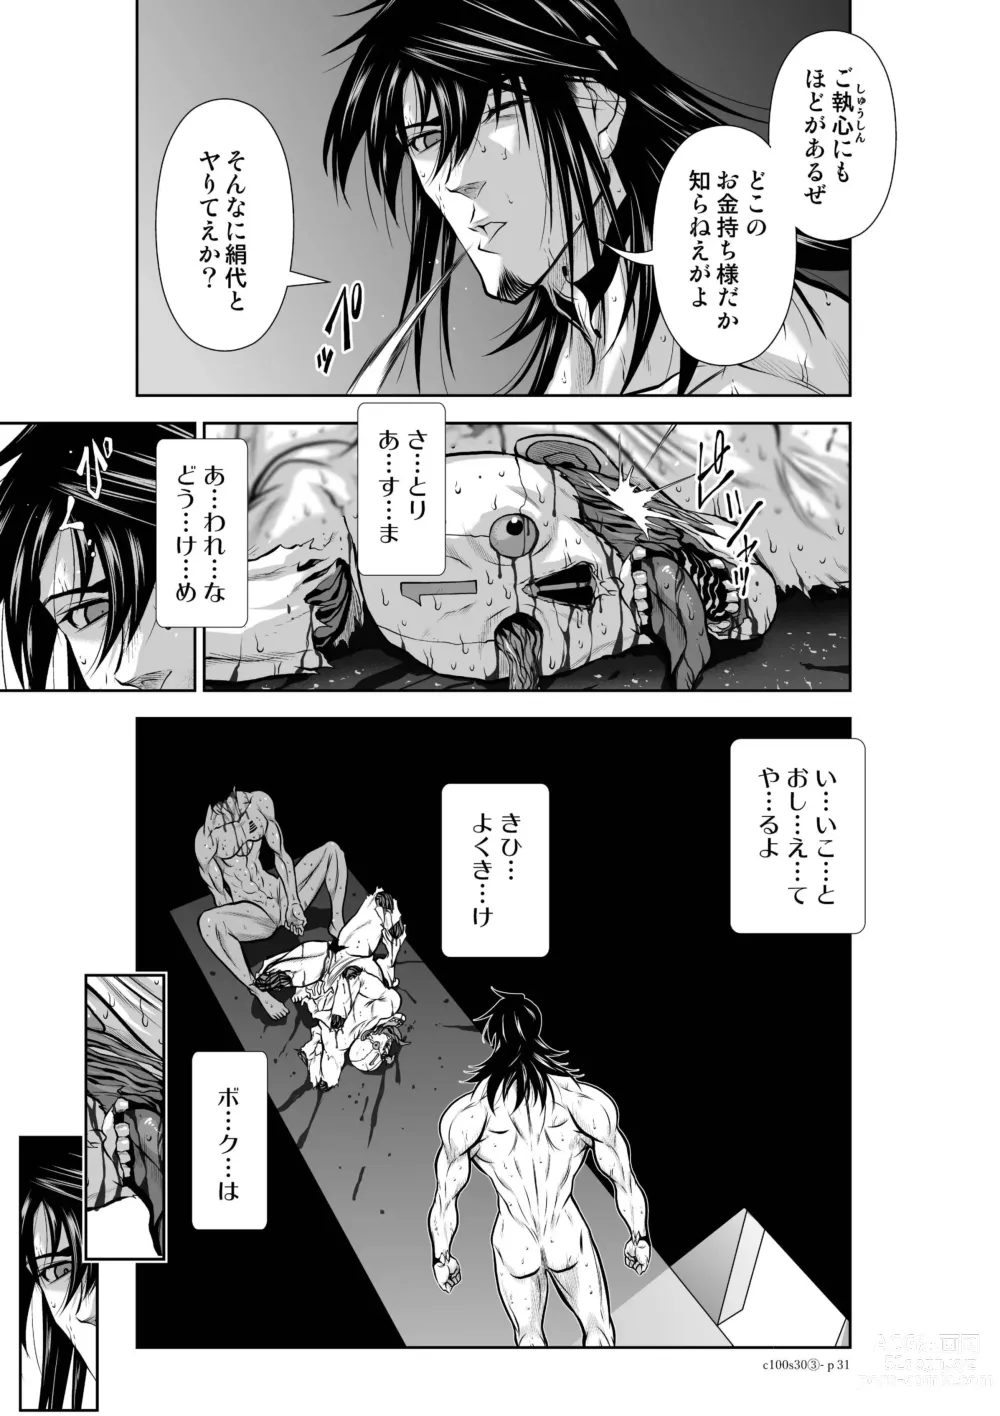 Page 1272 of manga Chijou Hyakkai Ch1-30